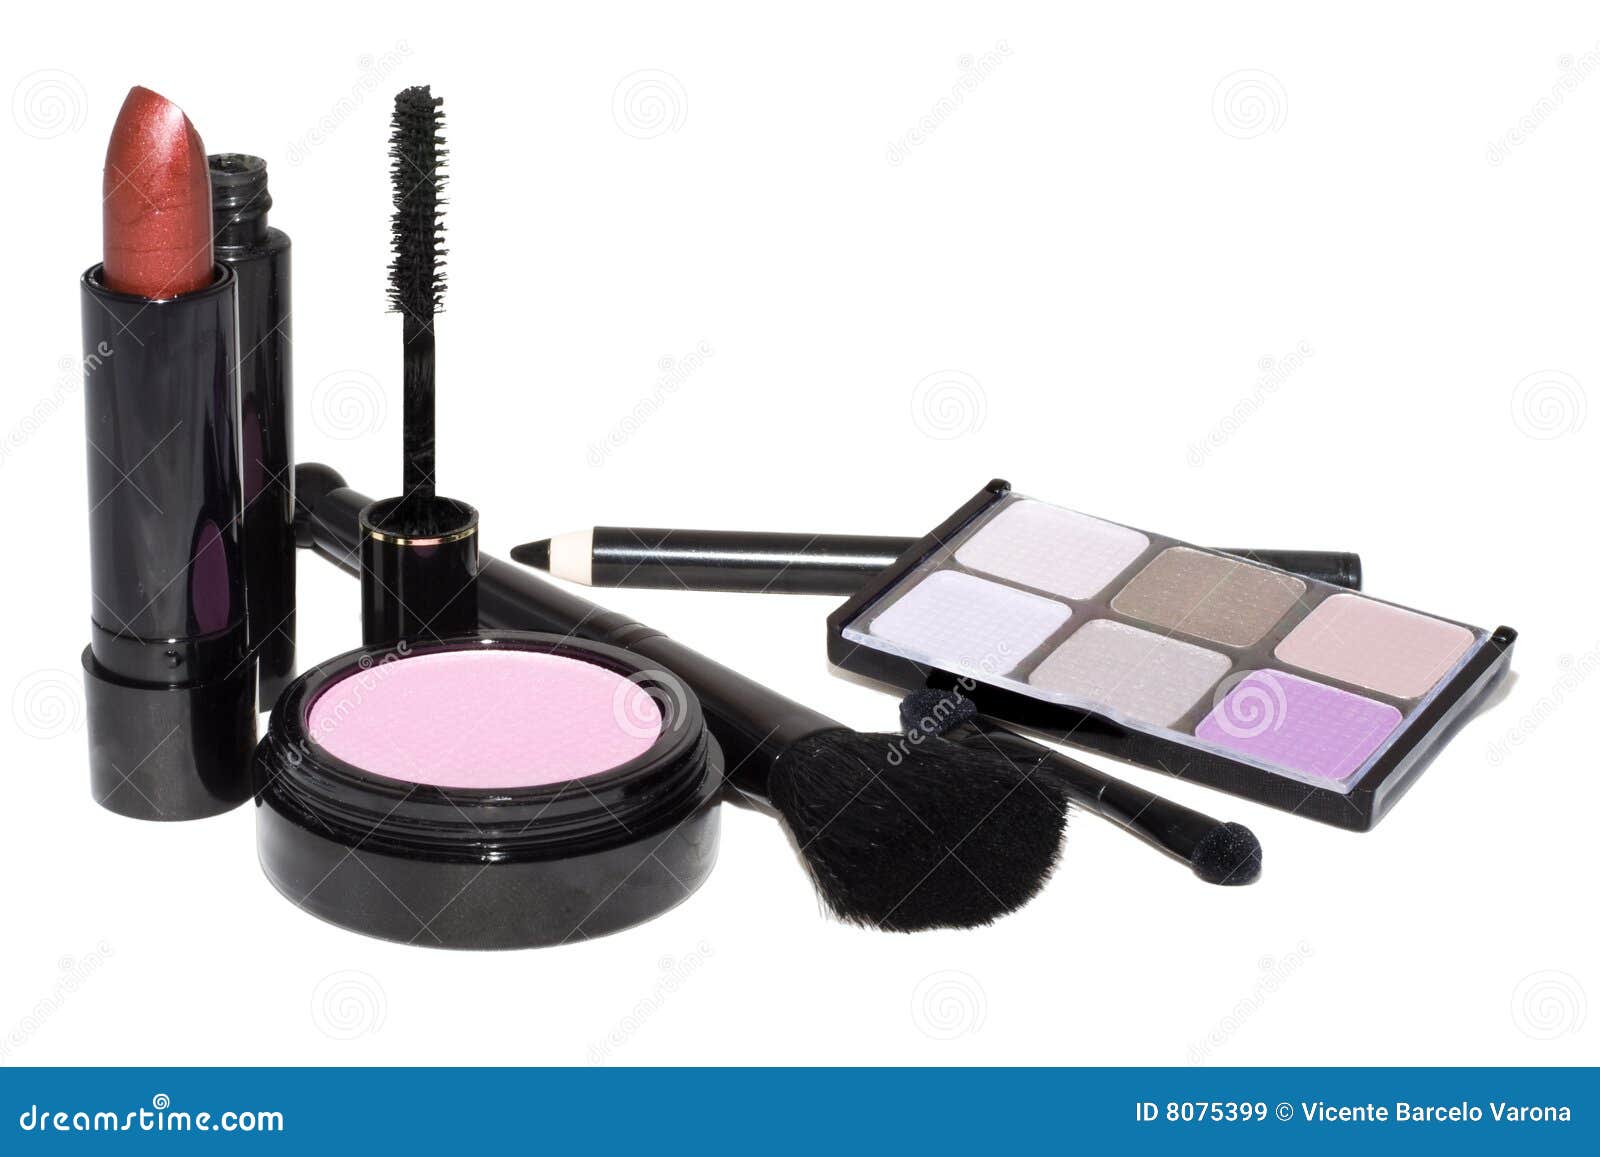 cosmetics set